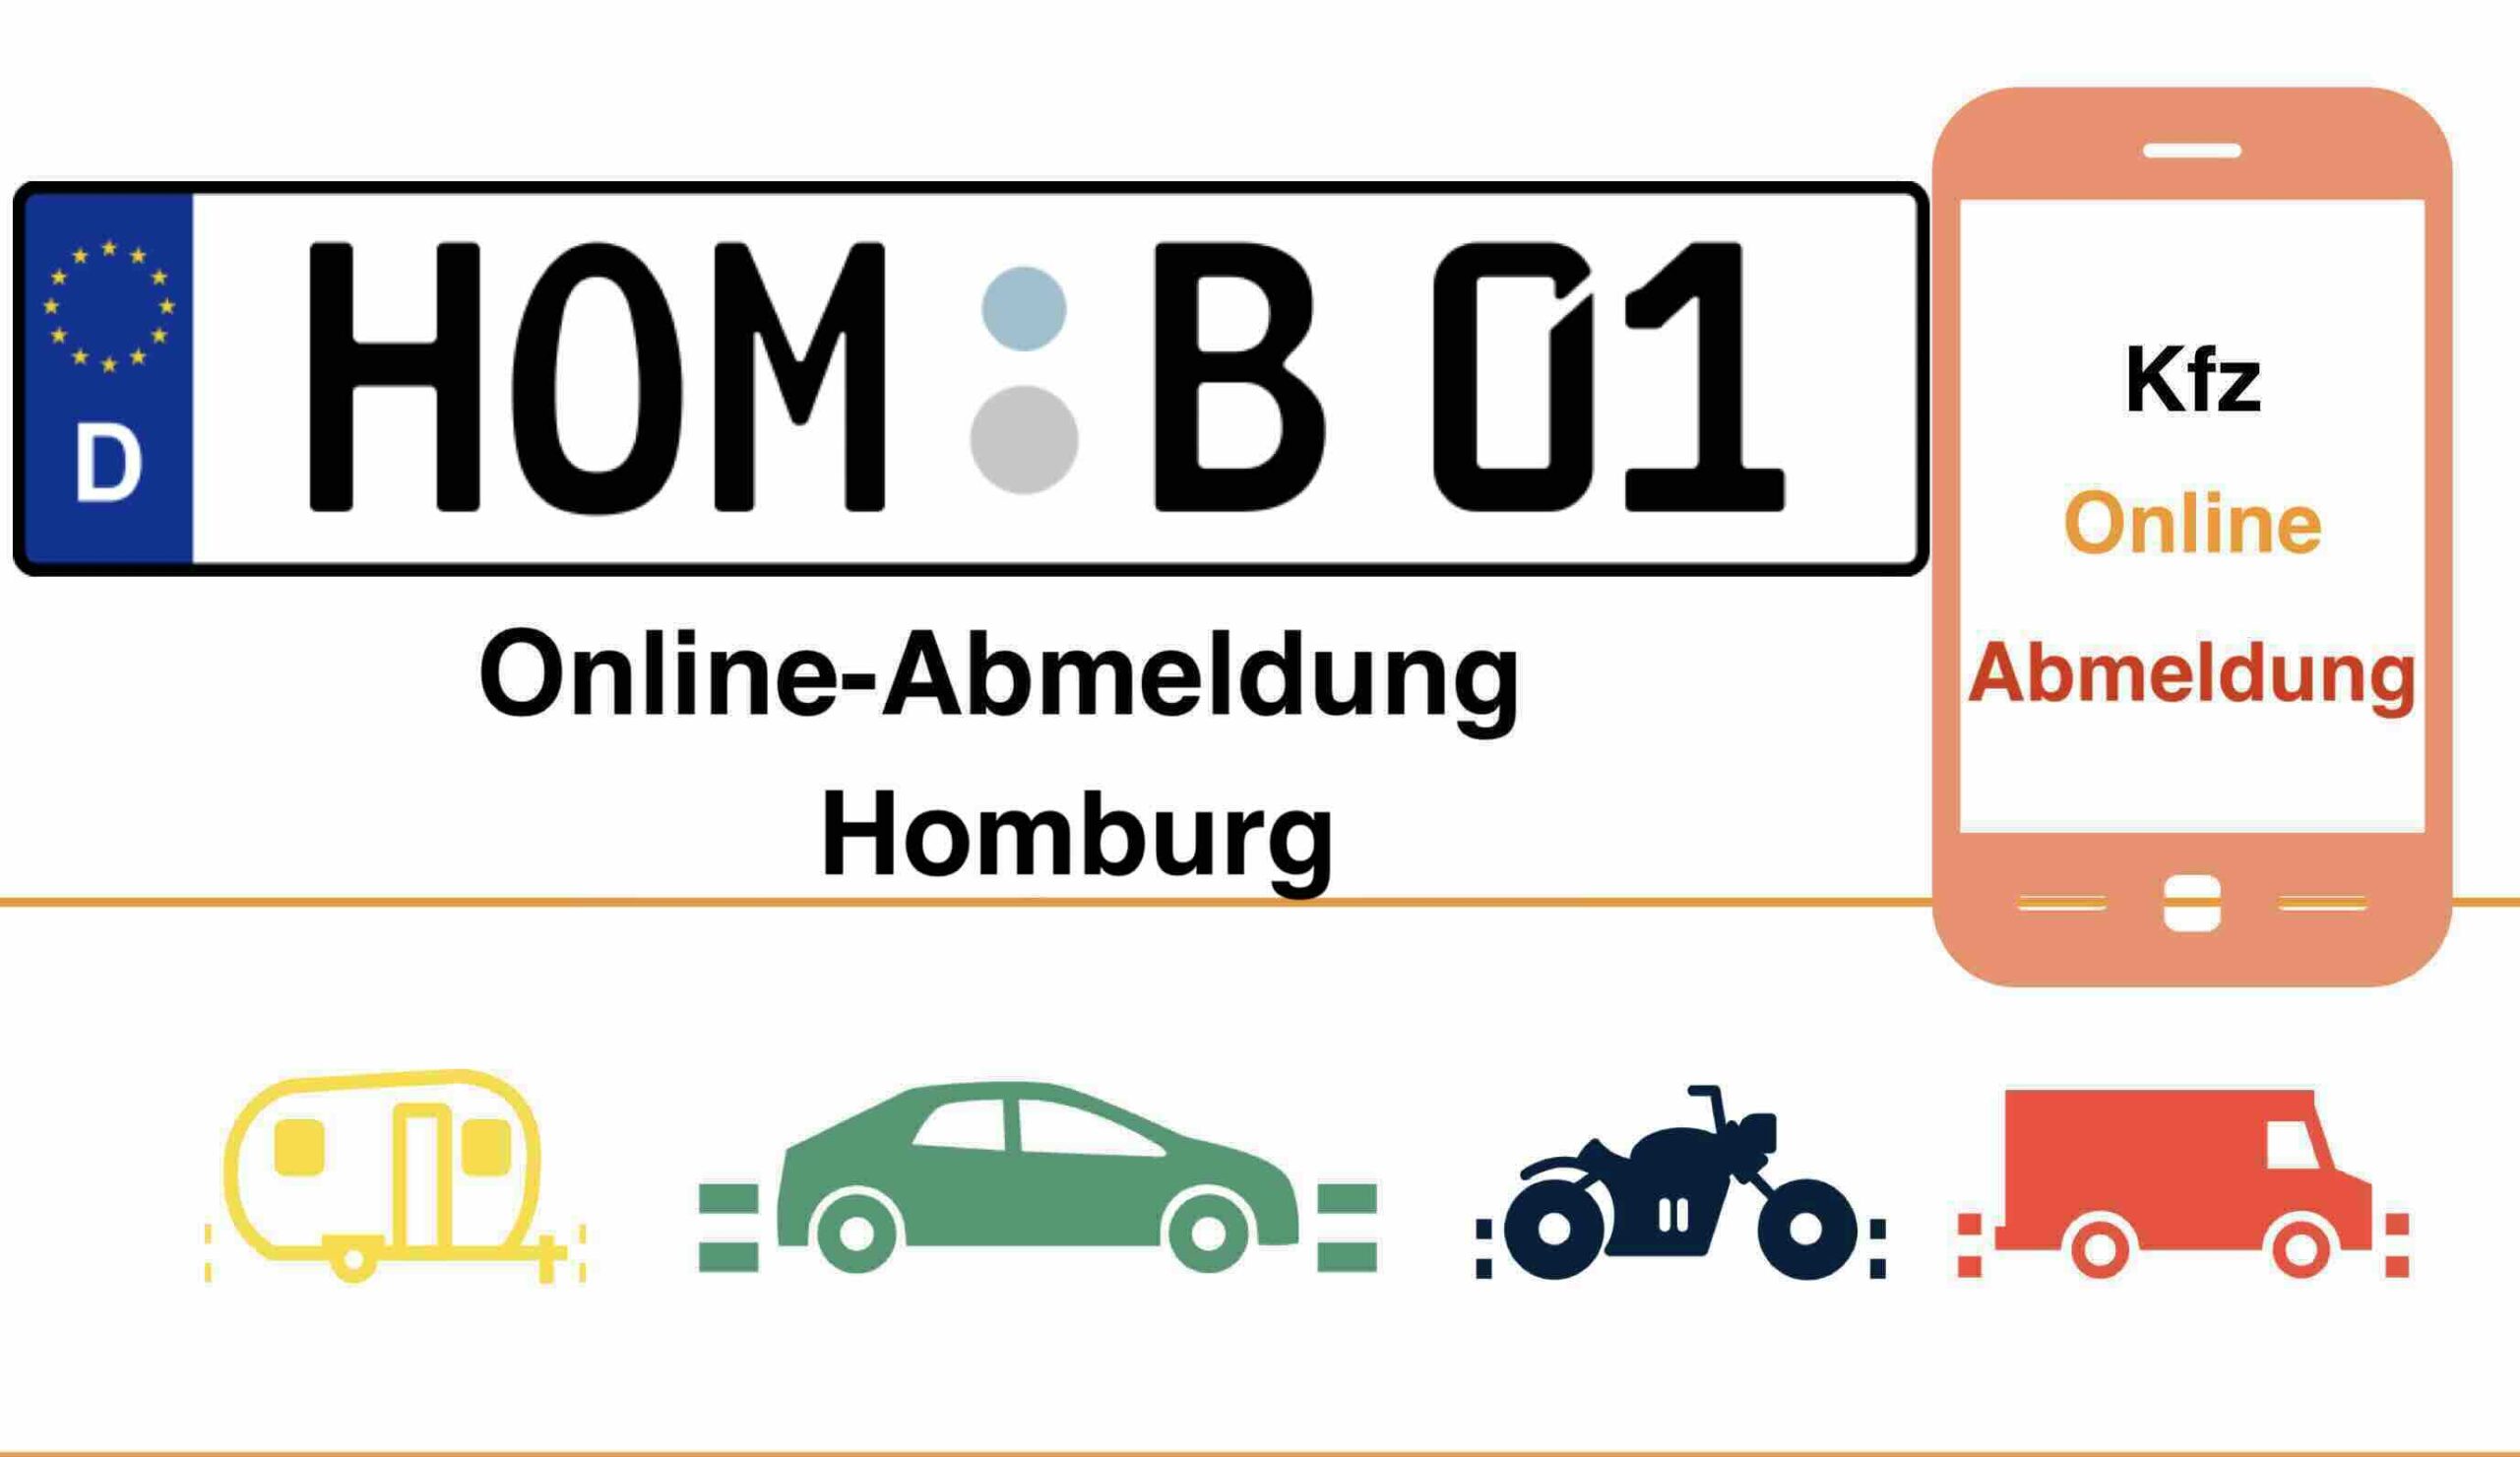 Online-Abmeldung in Homburg 